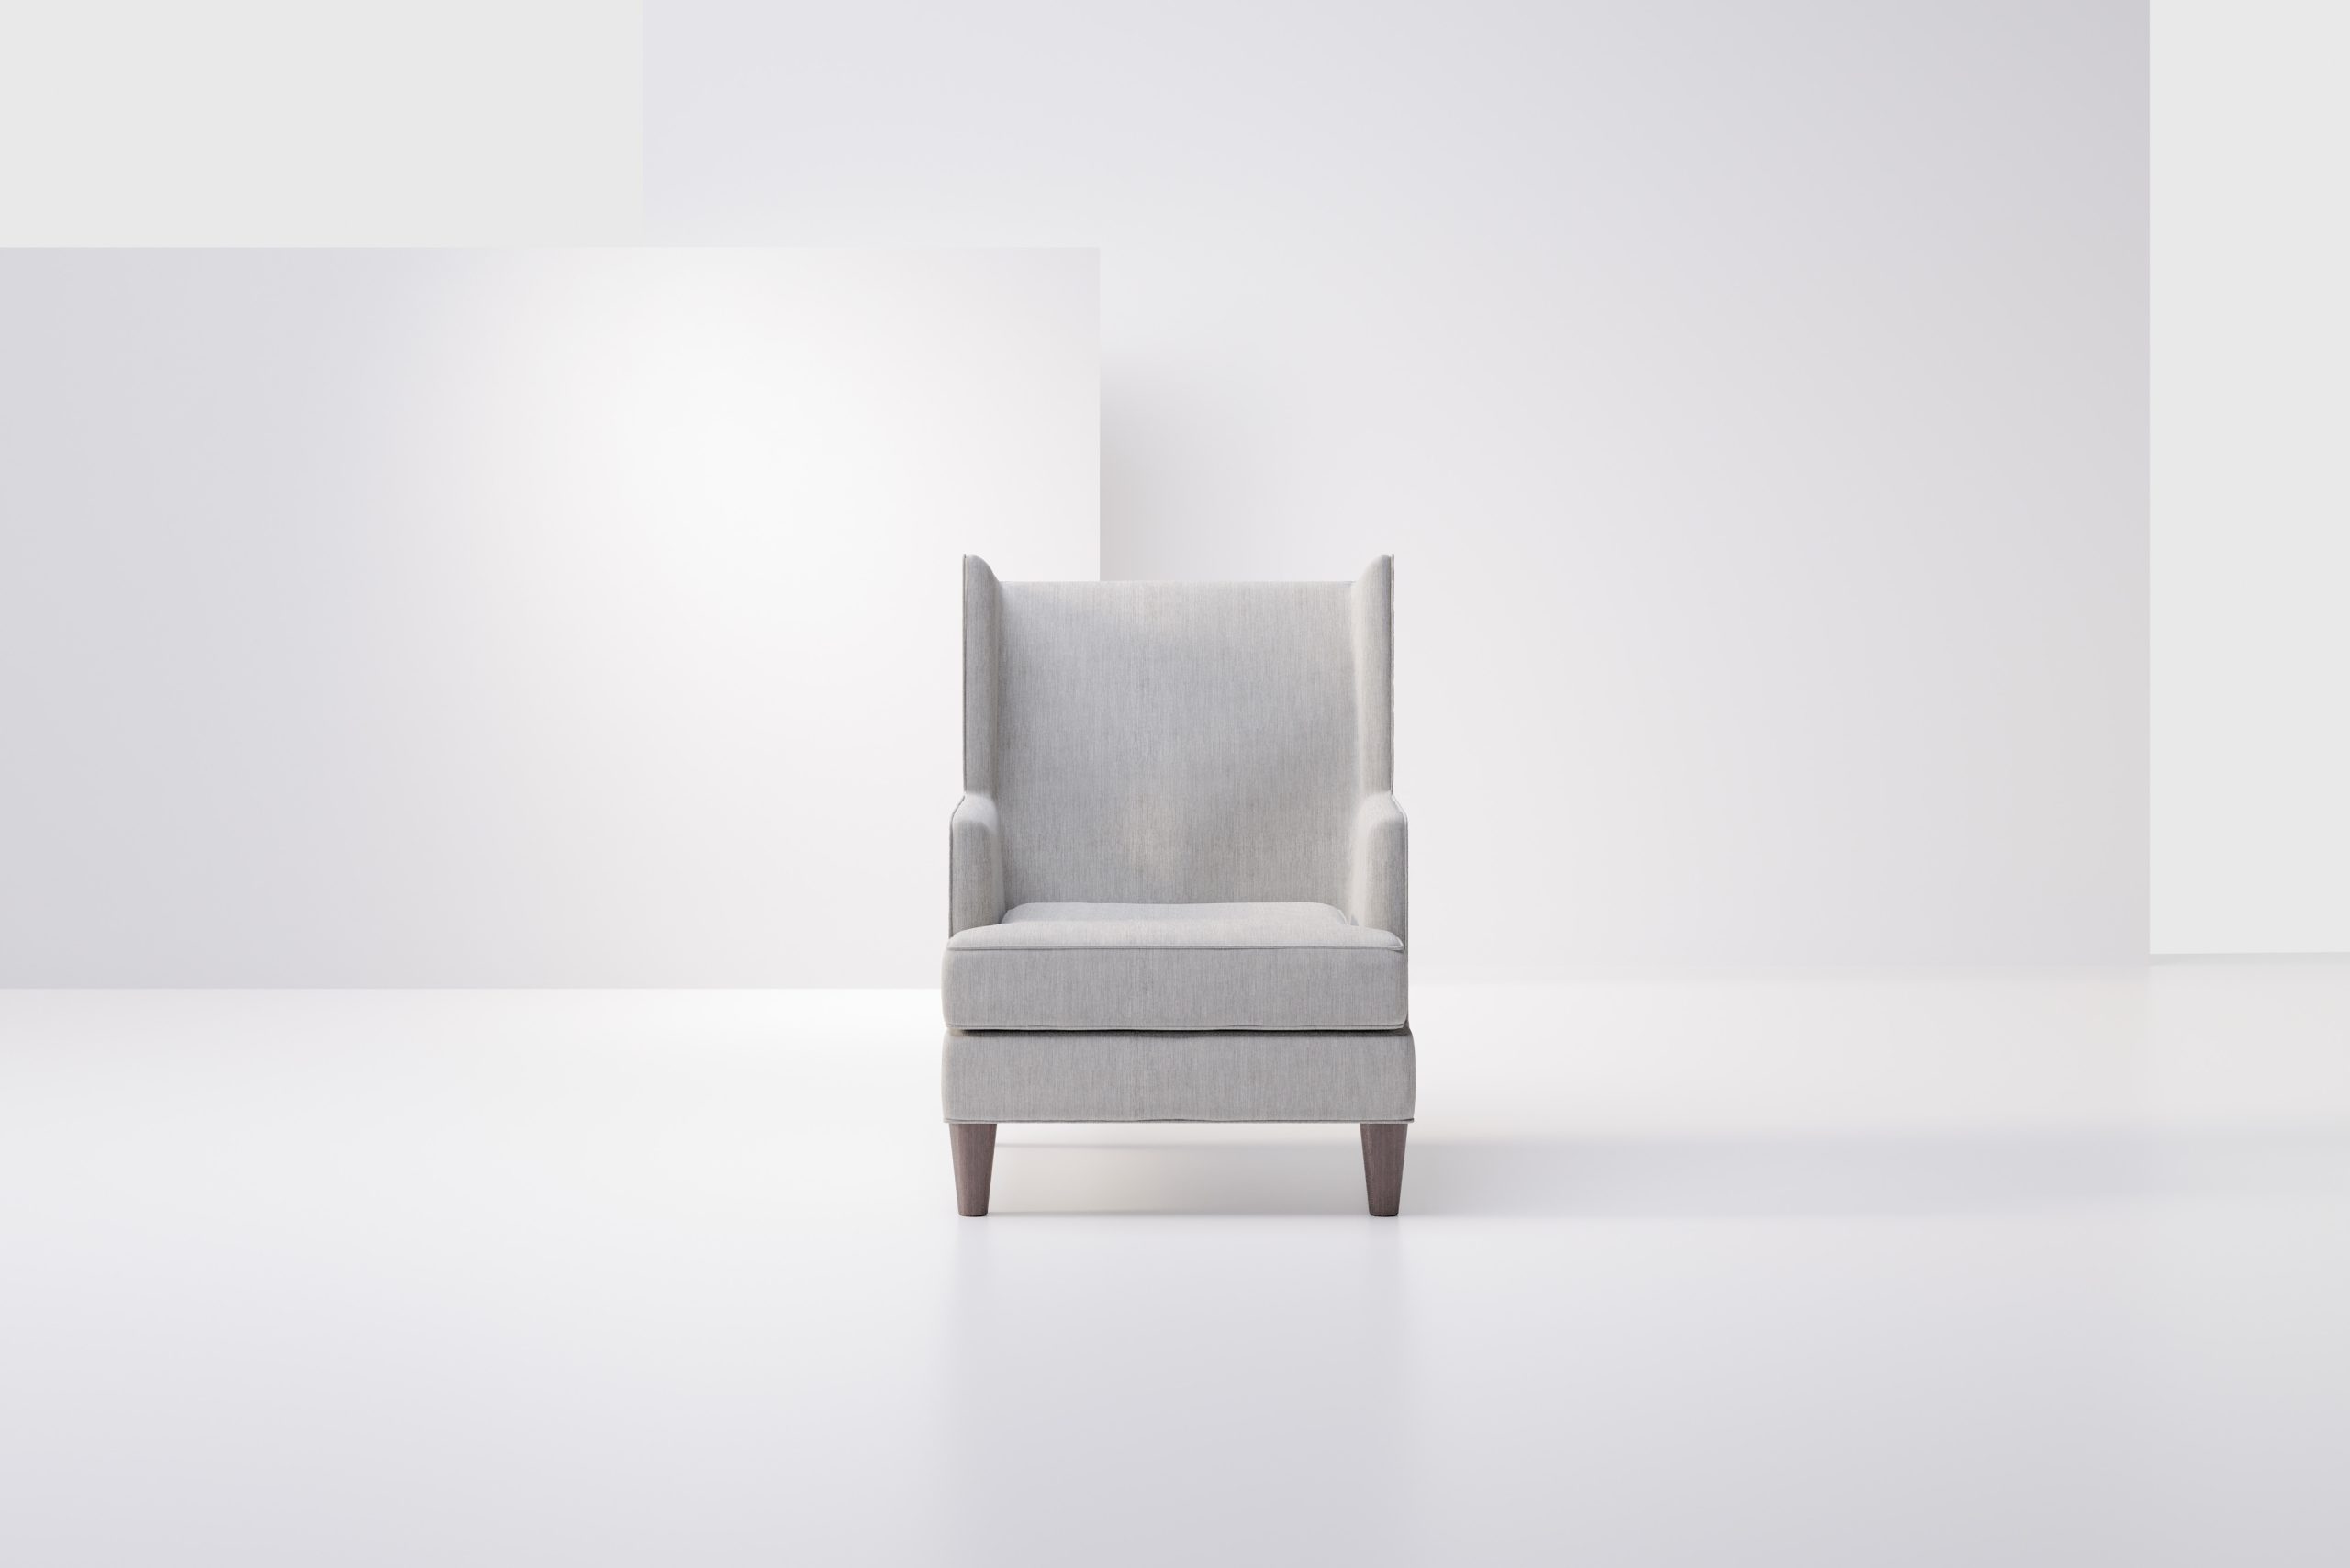 Chairs - Plural Studios